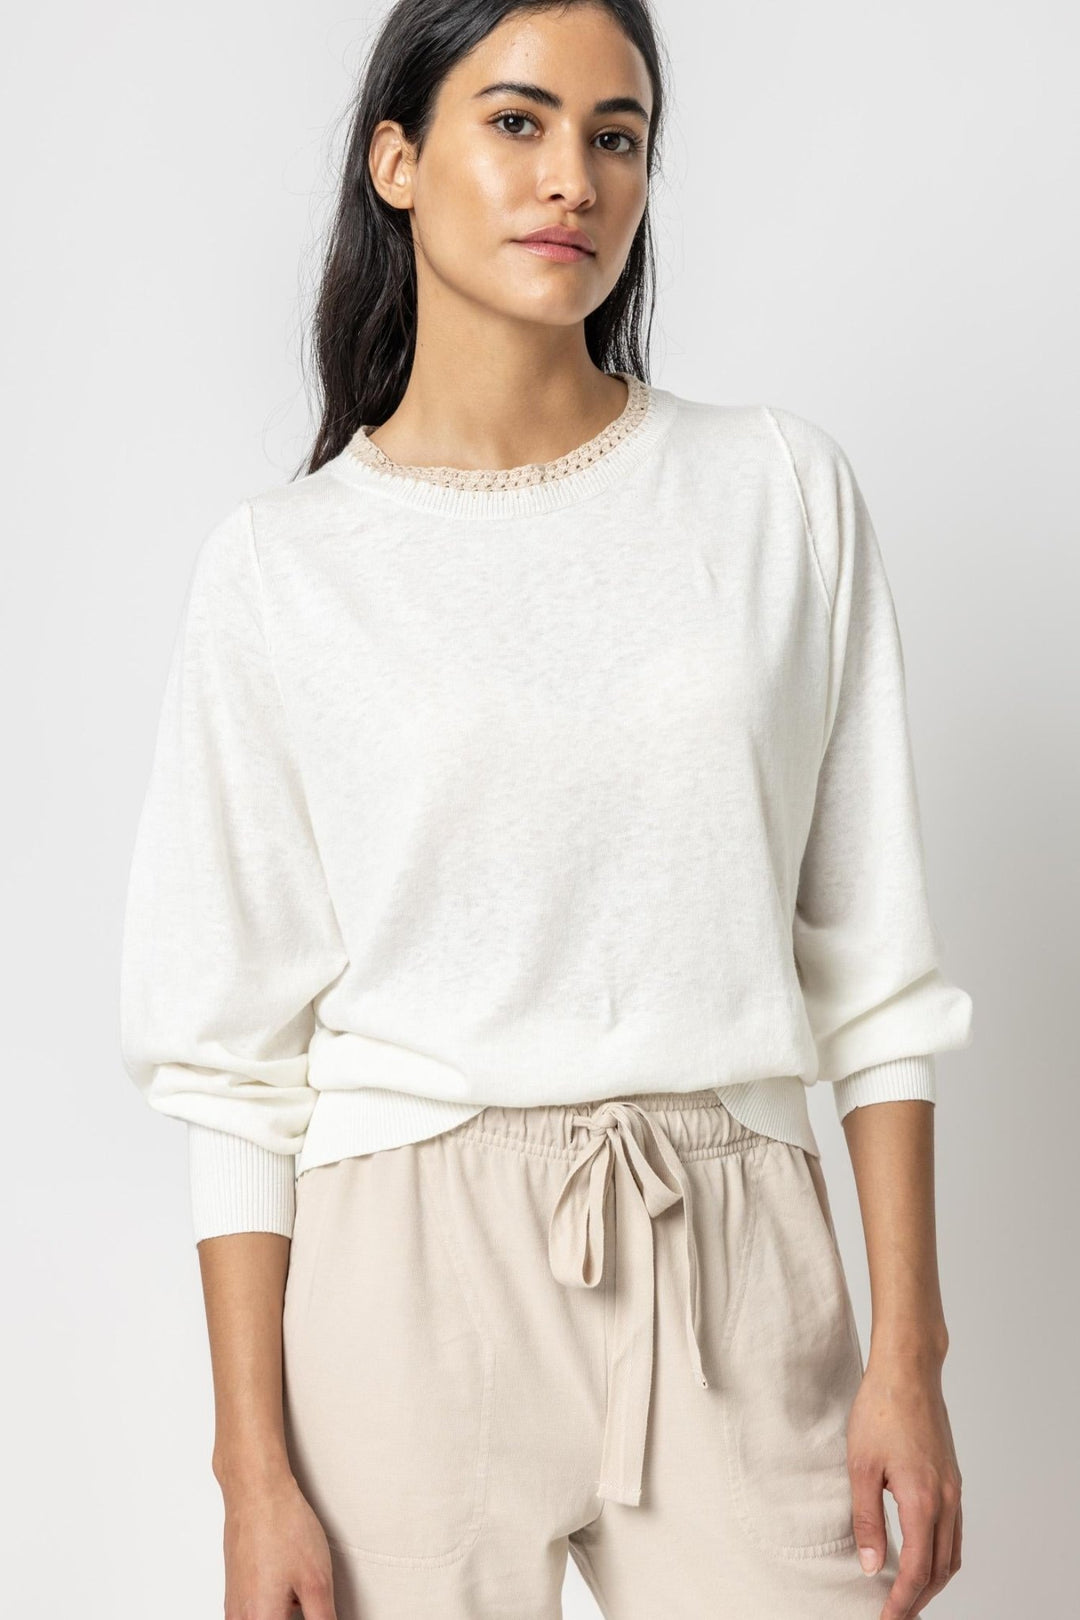 Lilla P - TCrochet Trim Sweater: Wht/Linen - Shorely Chic Boutique